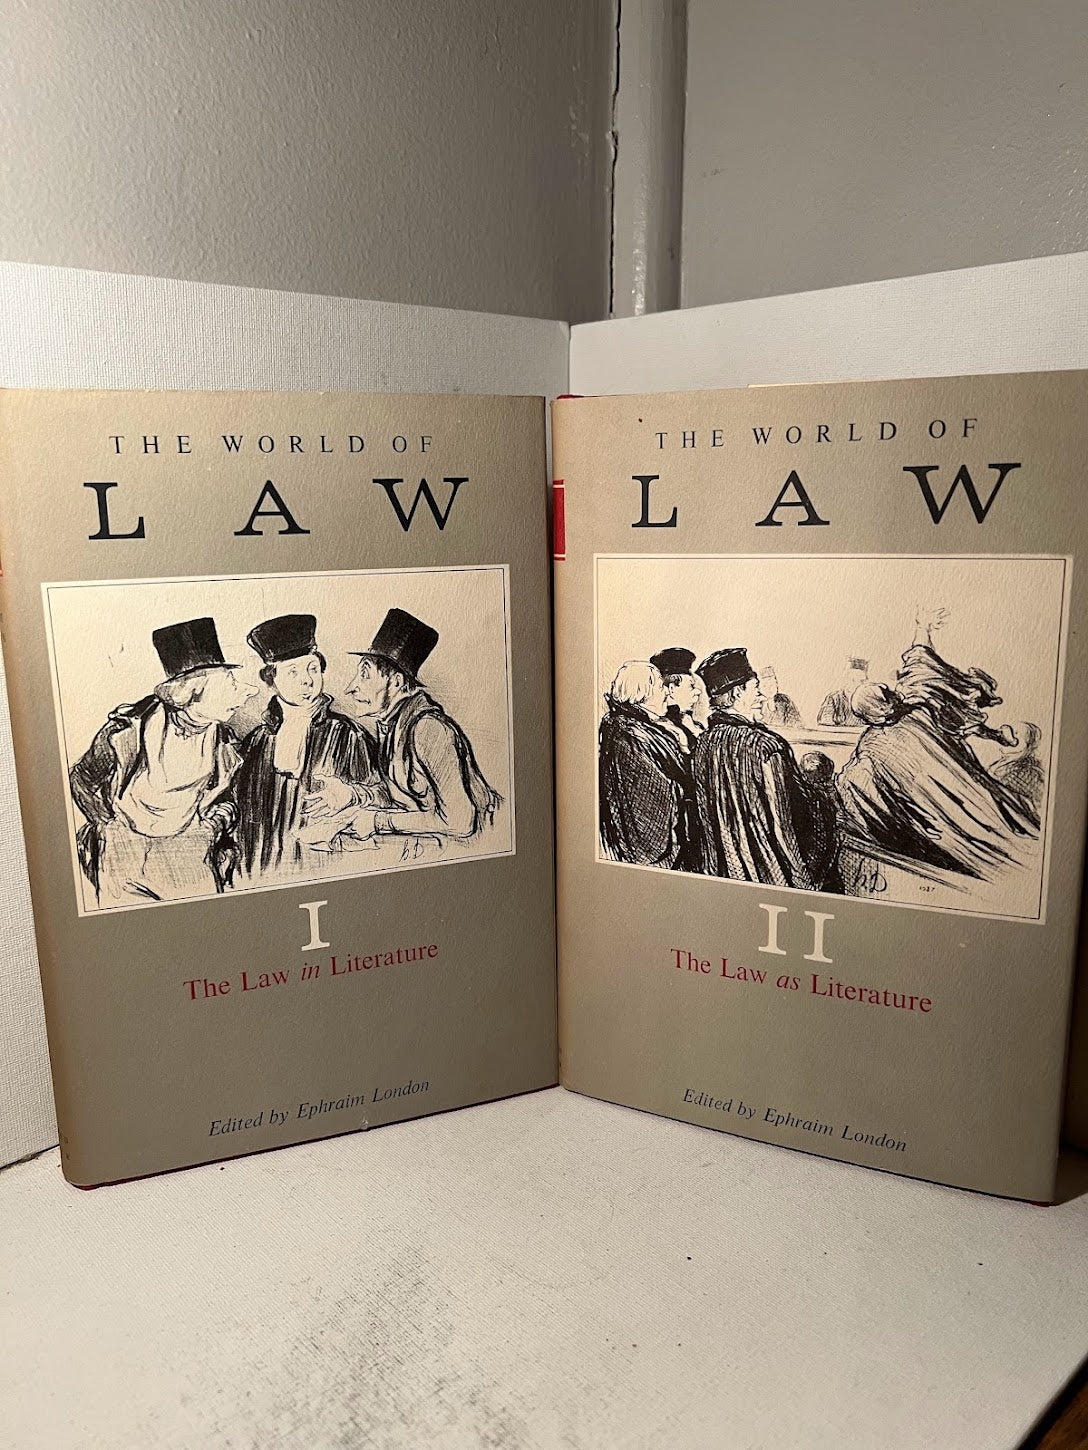 The World of Law edited by Ephraim London